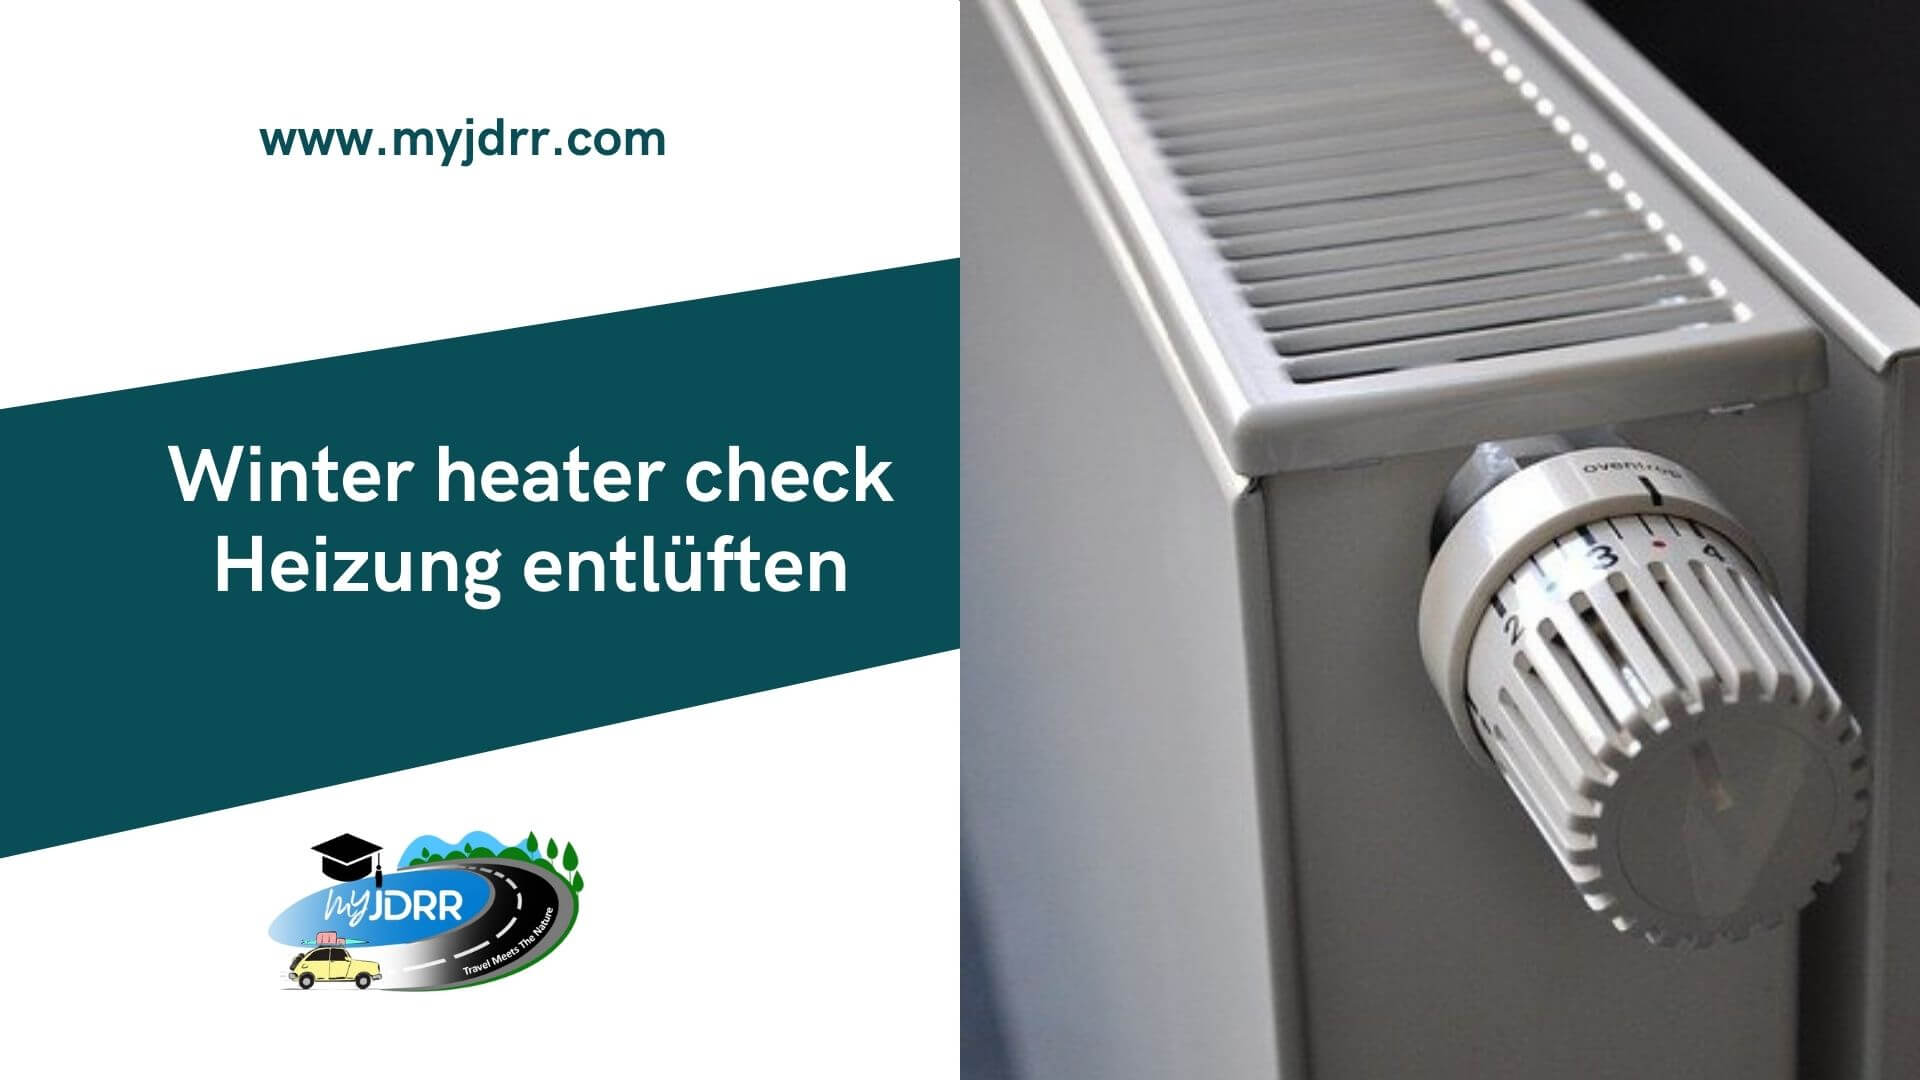 Heater vent (Heizung entlüften) - Winter heater check - My JDRR